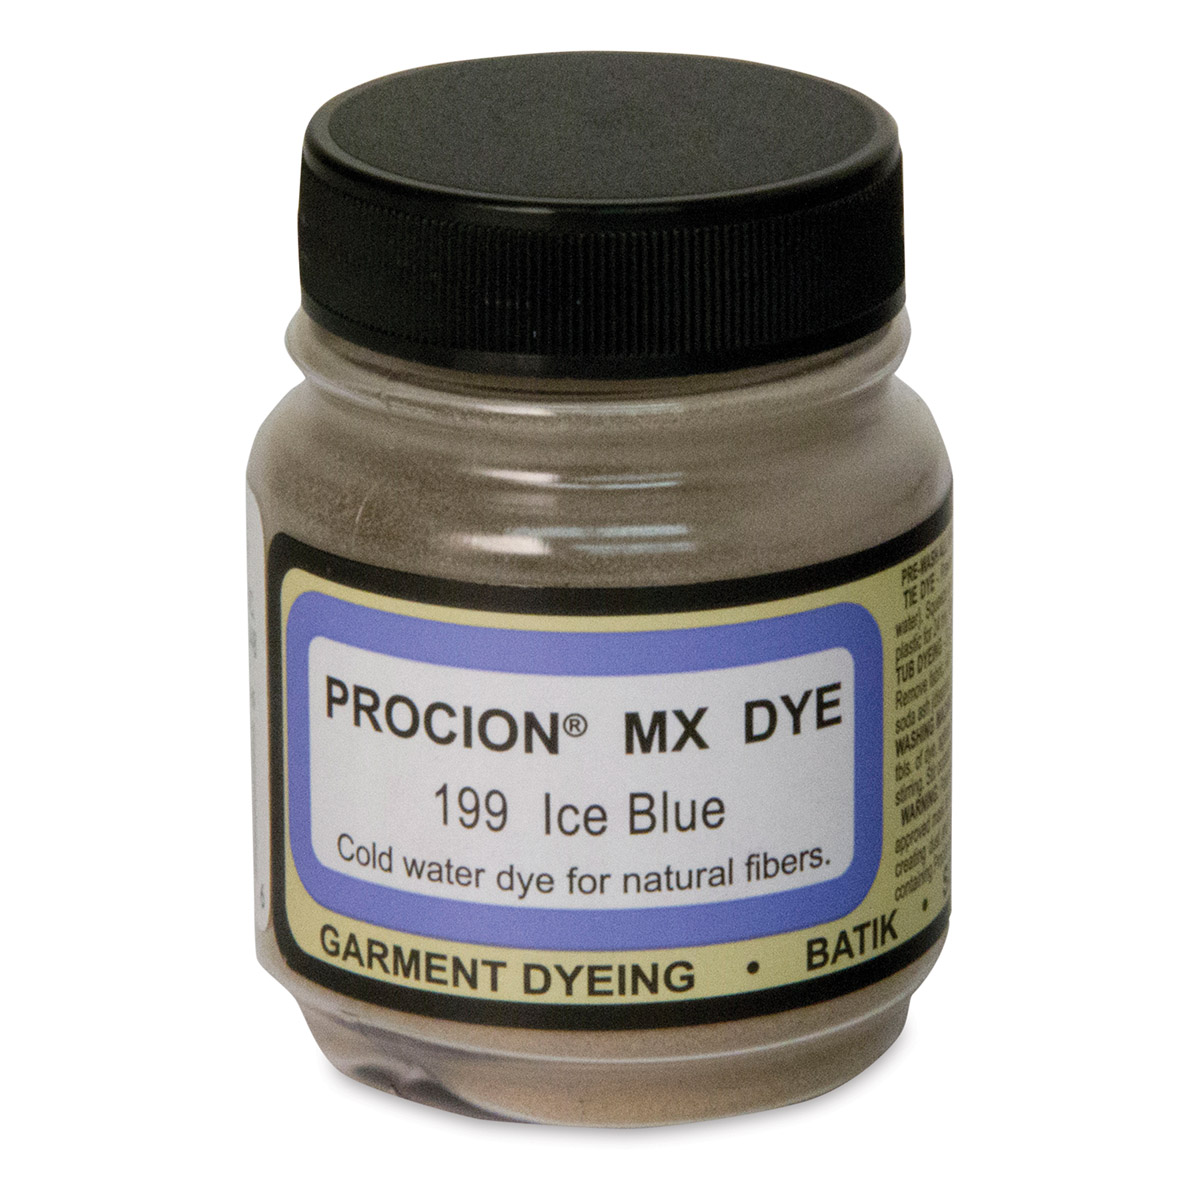 Jacquard Procion Mx Dye - Undisputed King of Tie Dye Powder - Jet Black -  2/3 Oz - Cold Water Fiber Reactive Dye Made in USA